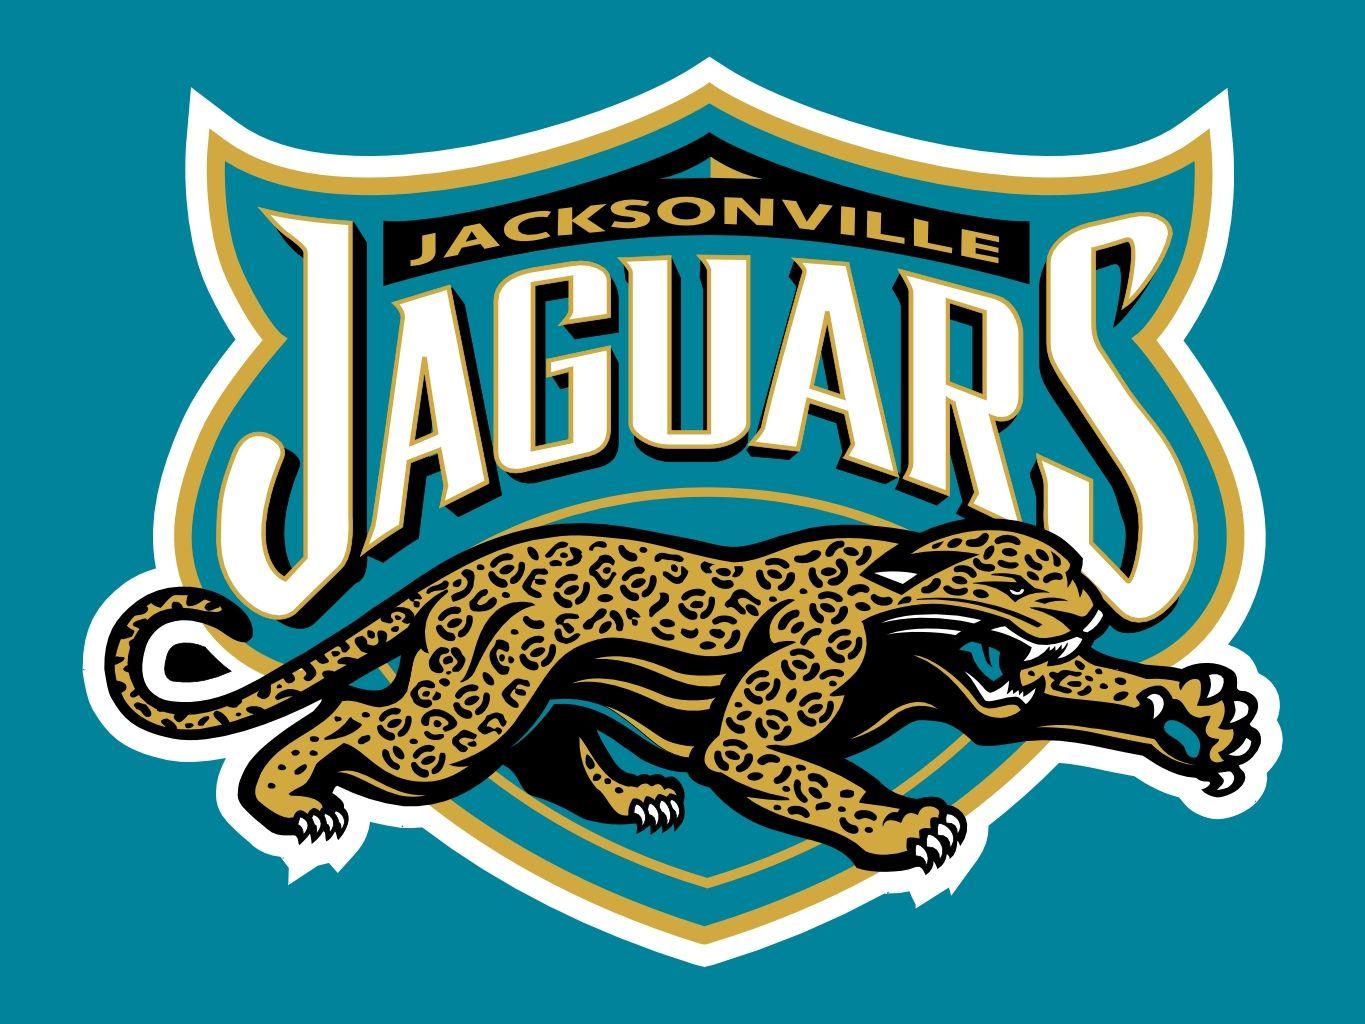 Jackson Jaguars Logo - jacksonville jaguars logos - Yahoo Image Search Results | NFL / NBA ...